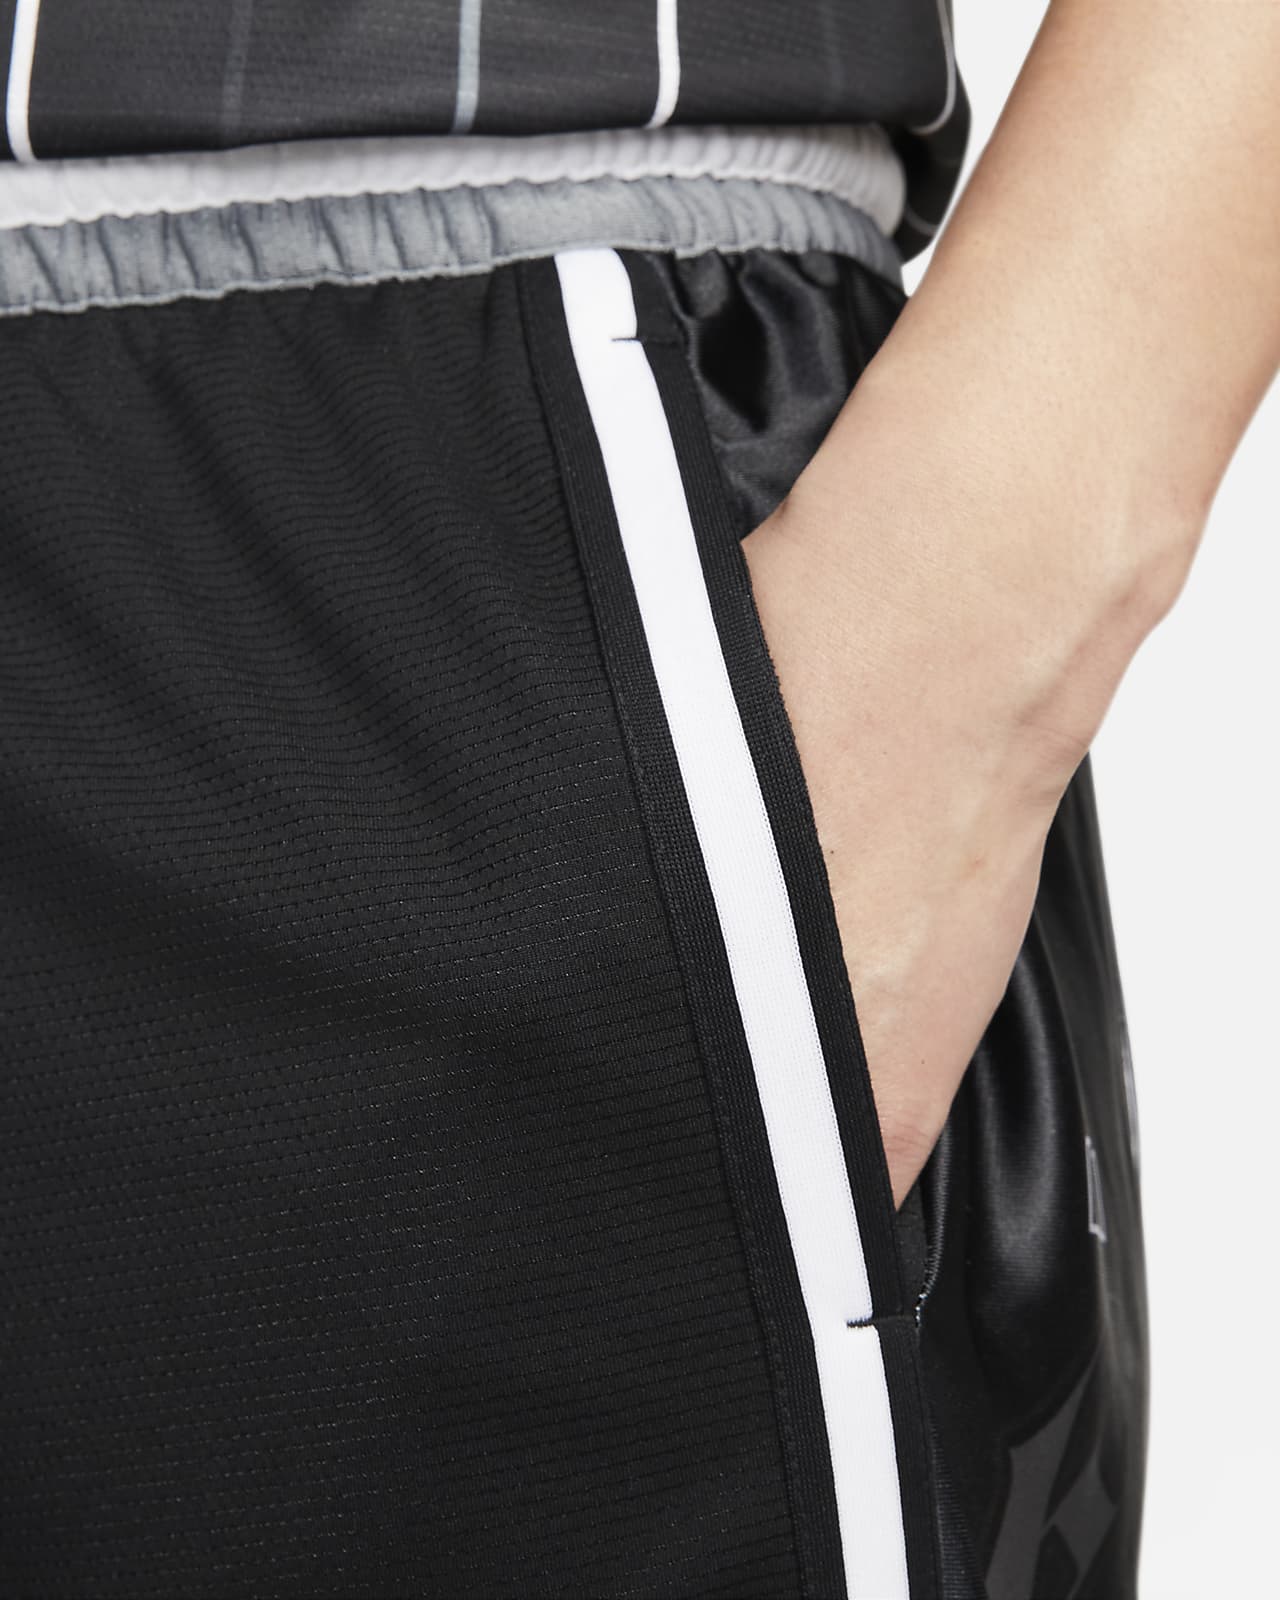 Kevin Durant Men's Nike Dri-FIT 20cm (approx.) Basketball Shorts. Nike ID